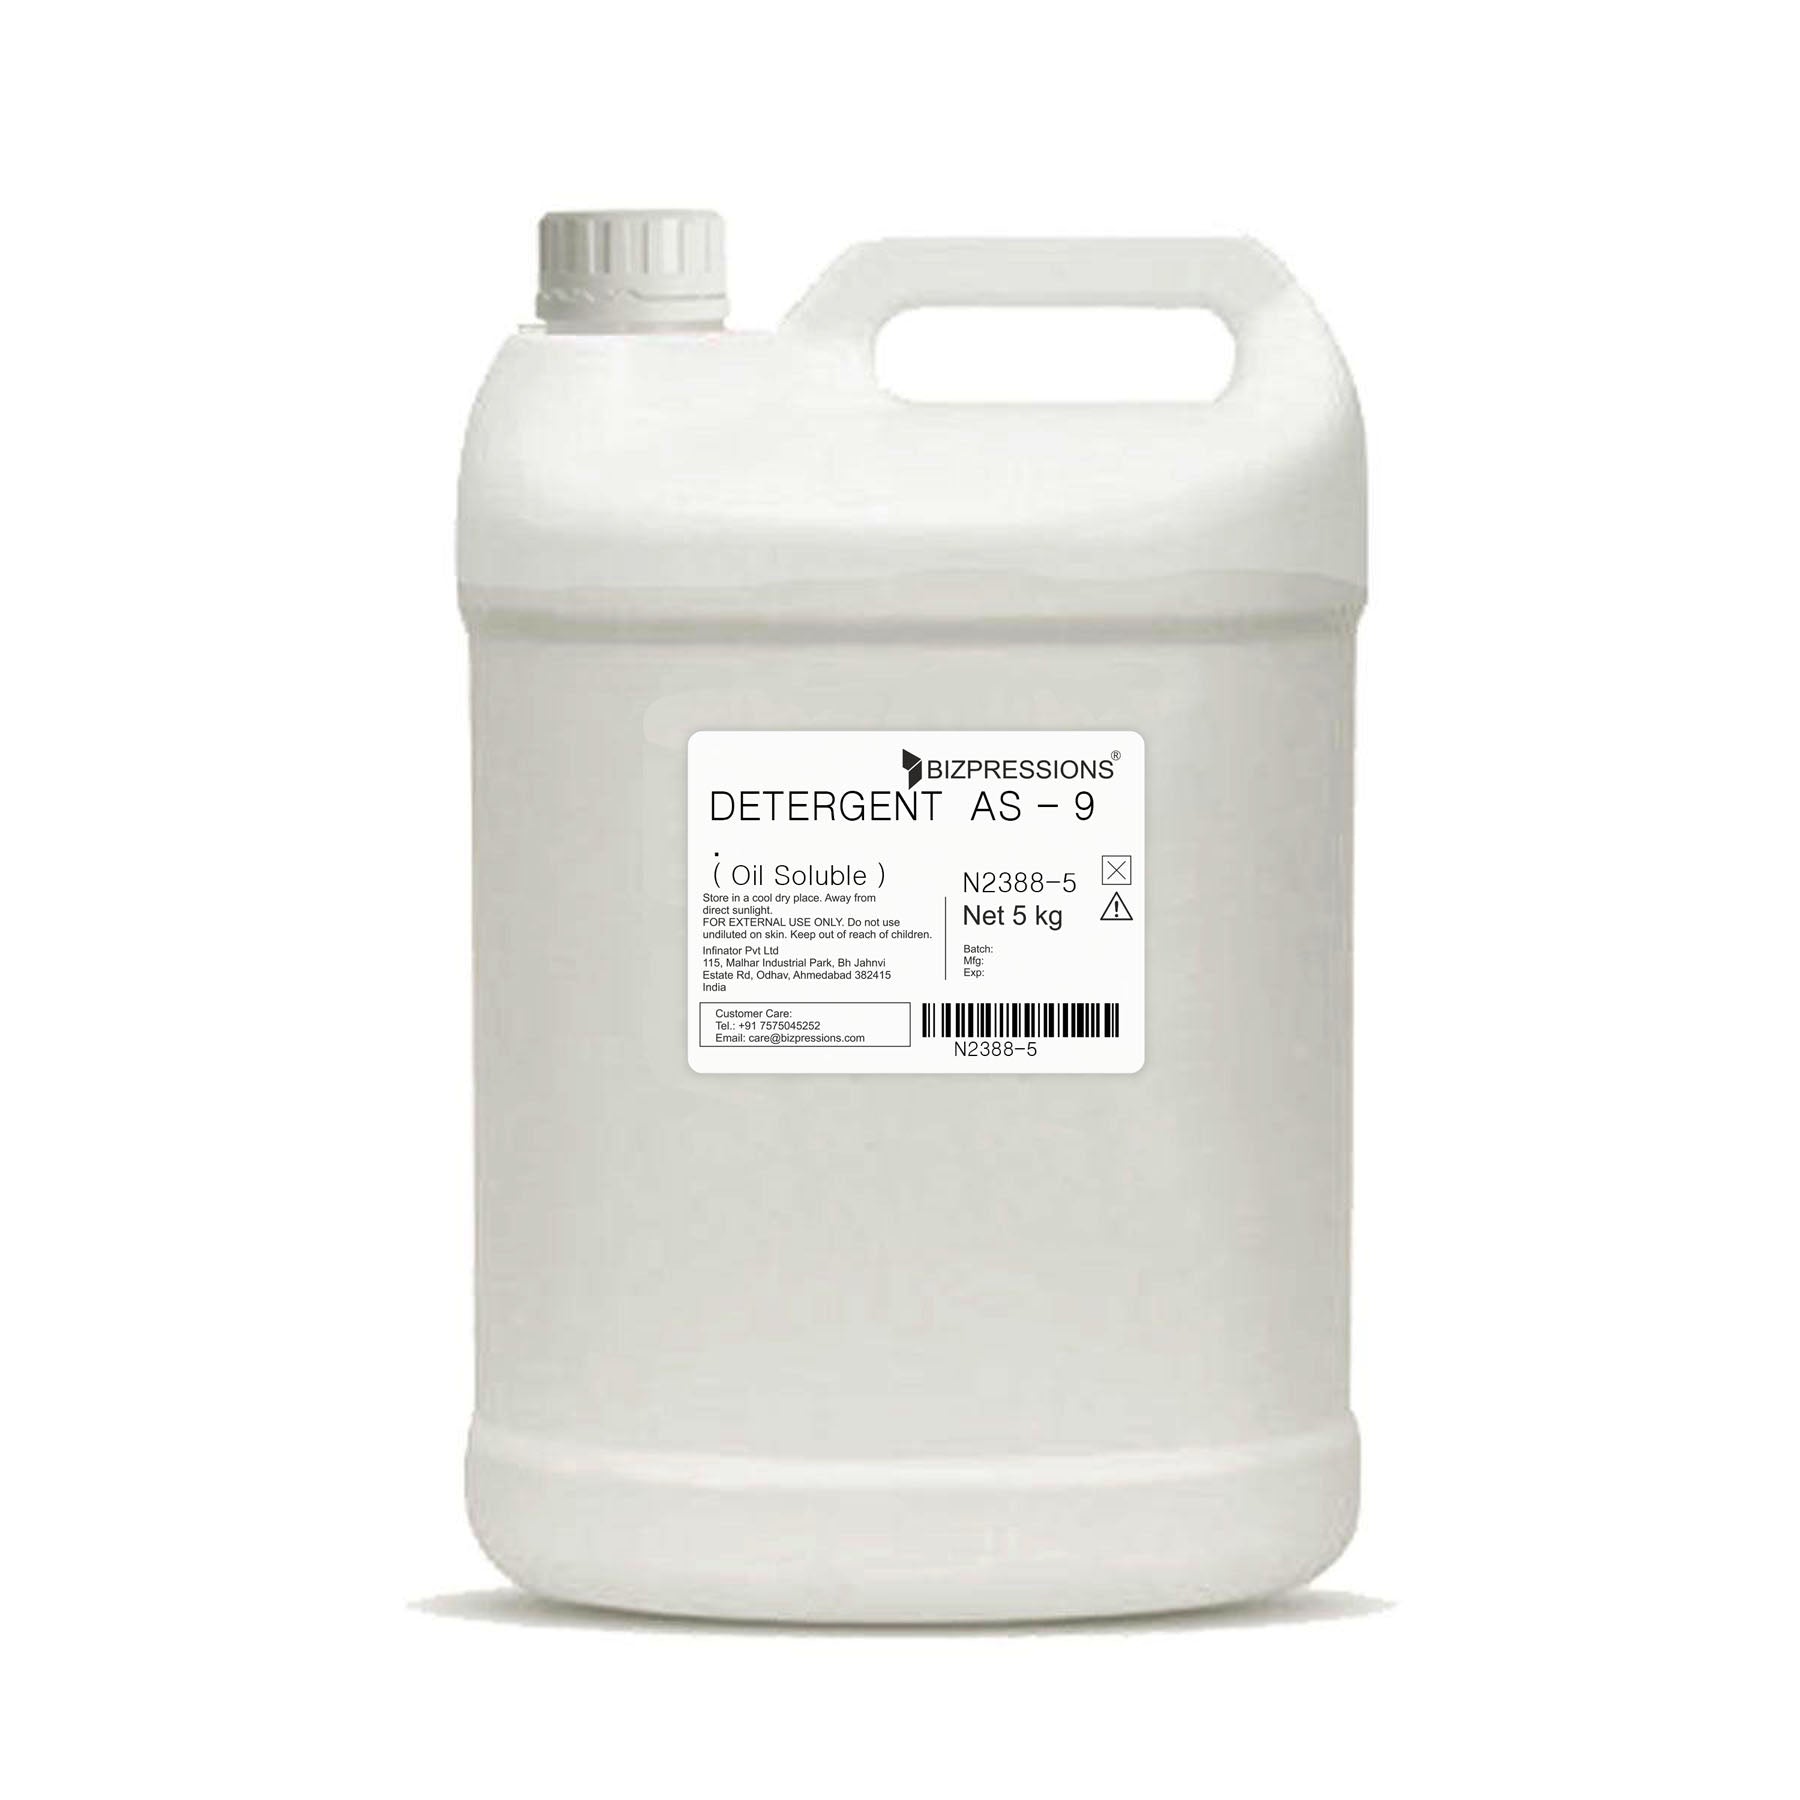 DETERGENT AS - 9 - Fragrance ( Oil Soluble ) - 5 kg